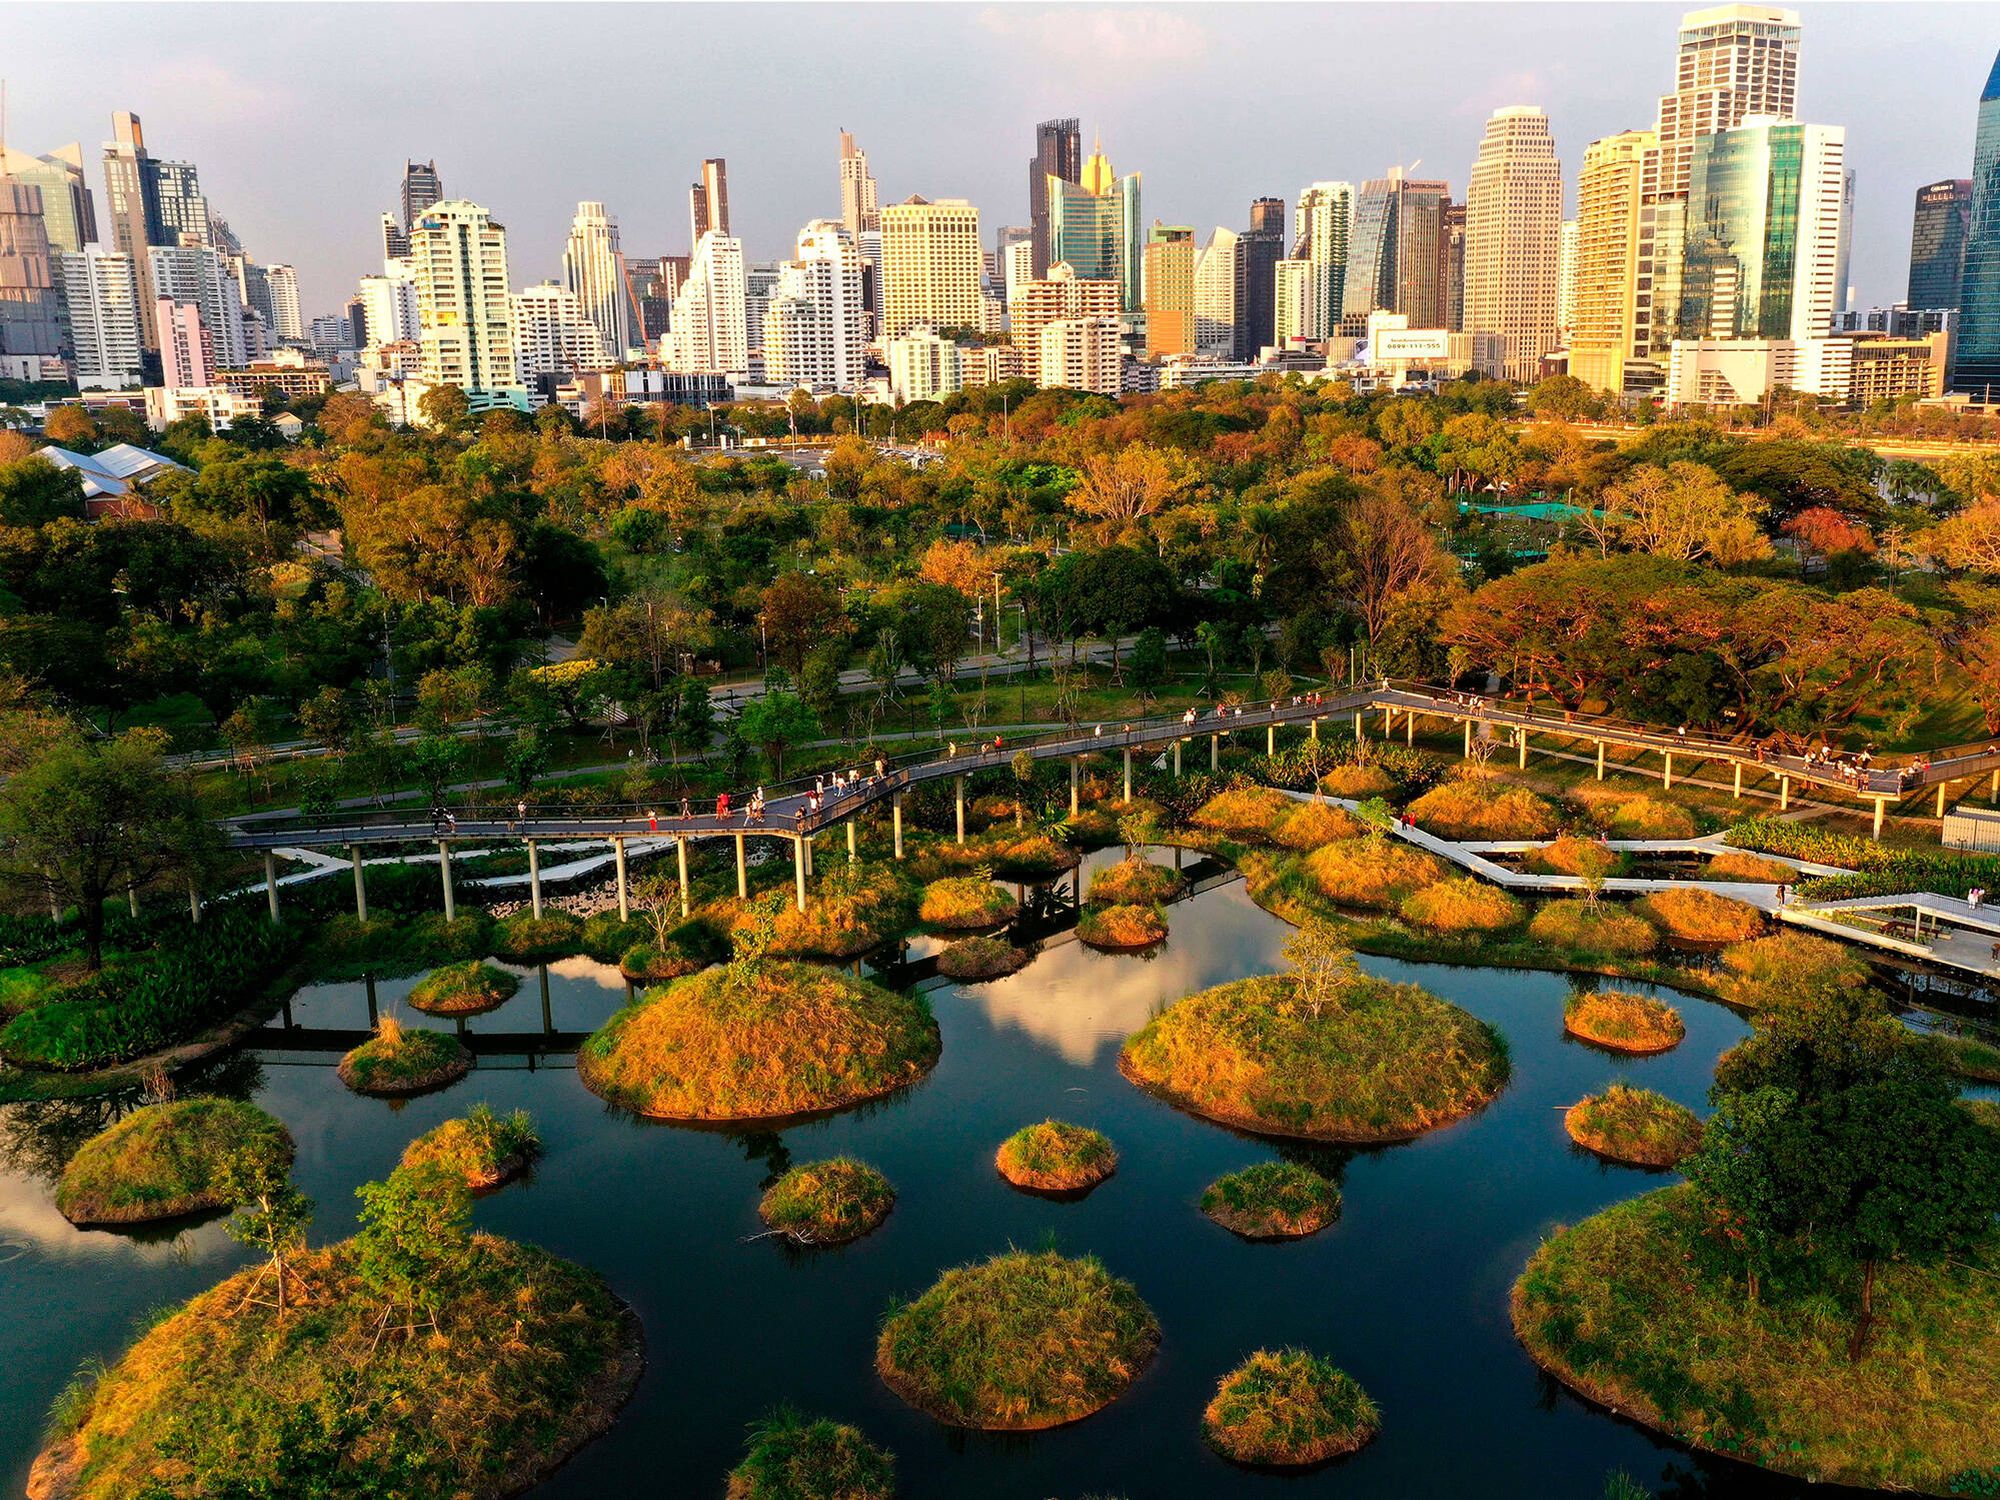 Parque forestal de Benjakitti en Bangkok. (Turenscape/The Cultural Landscape Foundation)